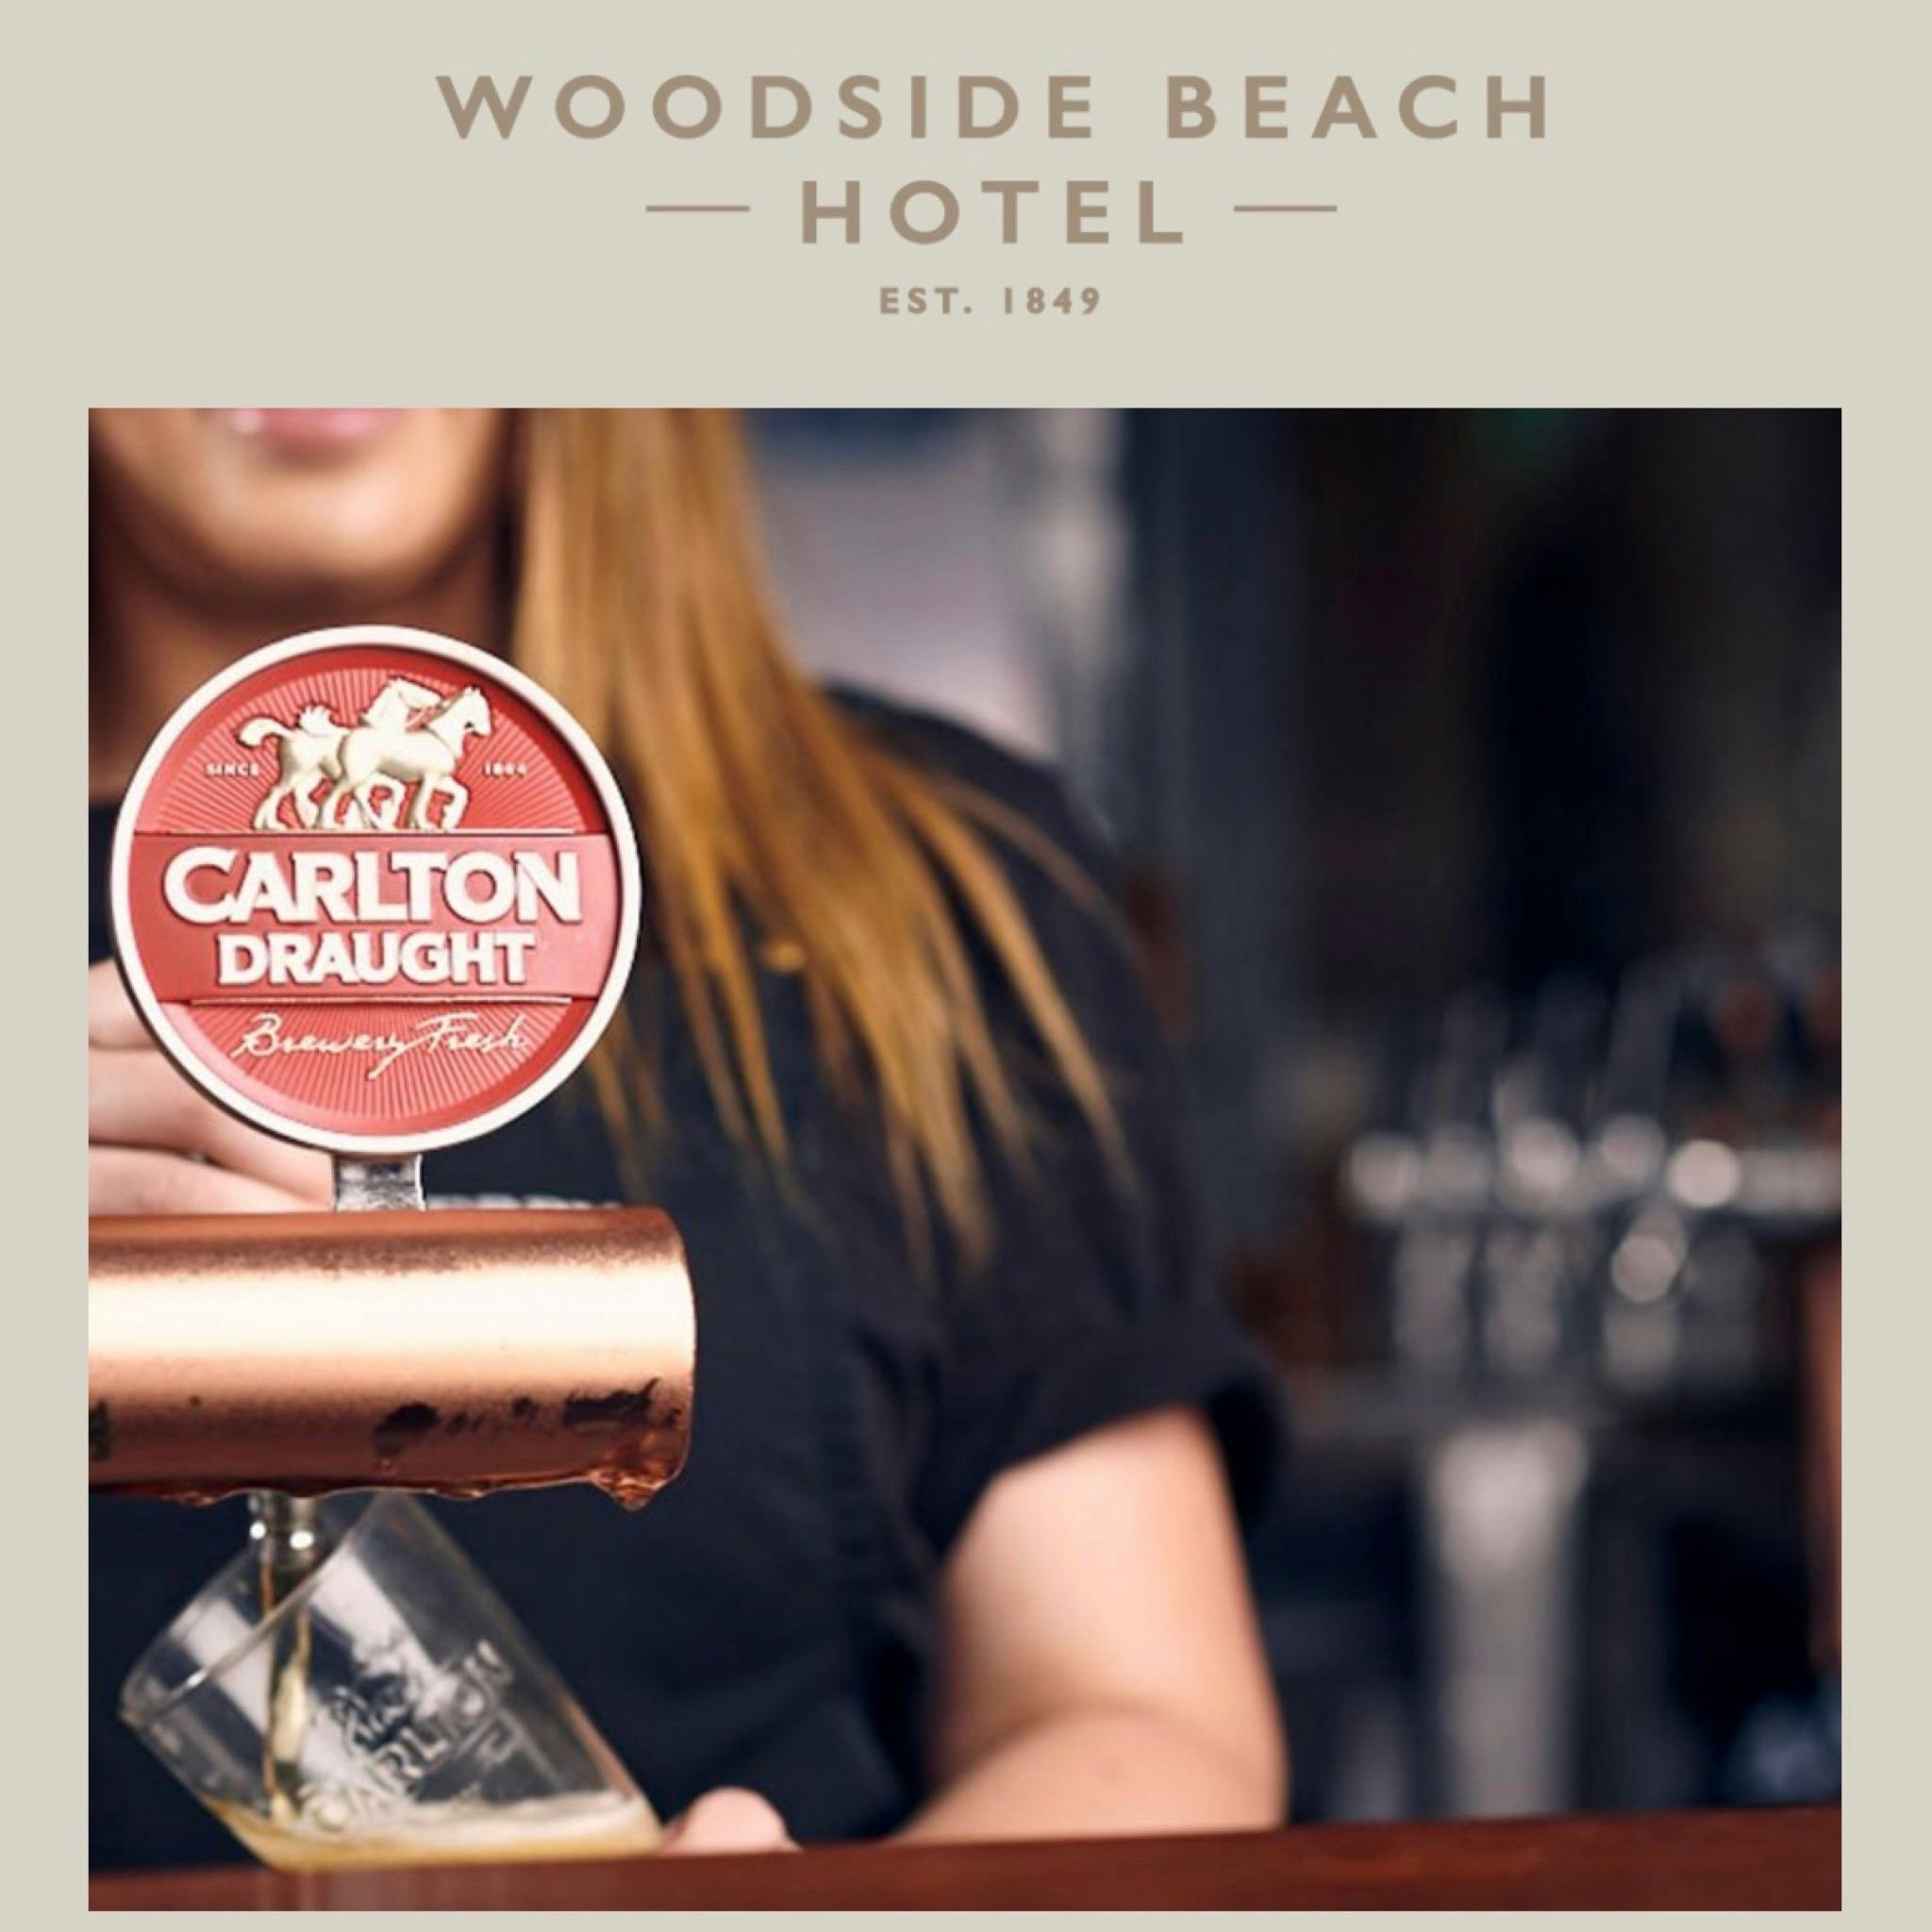 Woodside Beach Hotel reopens